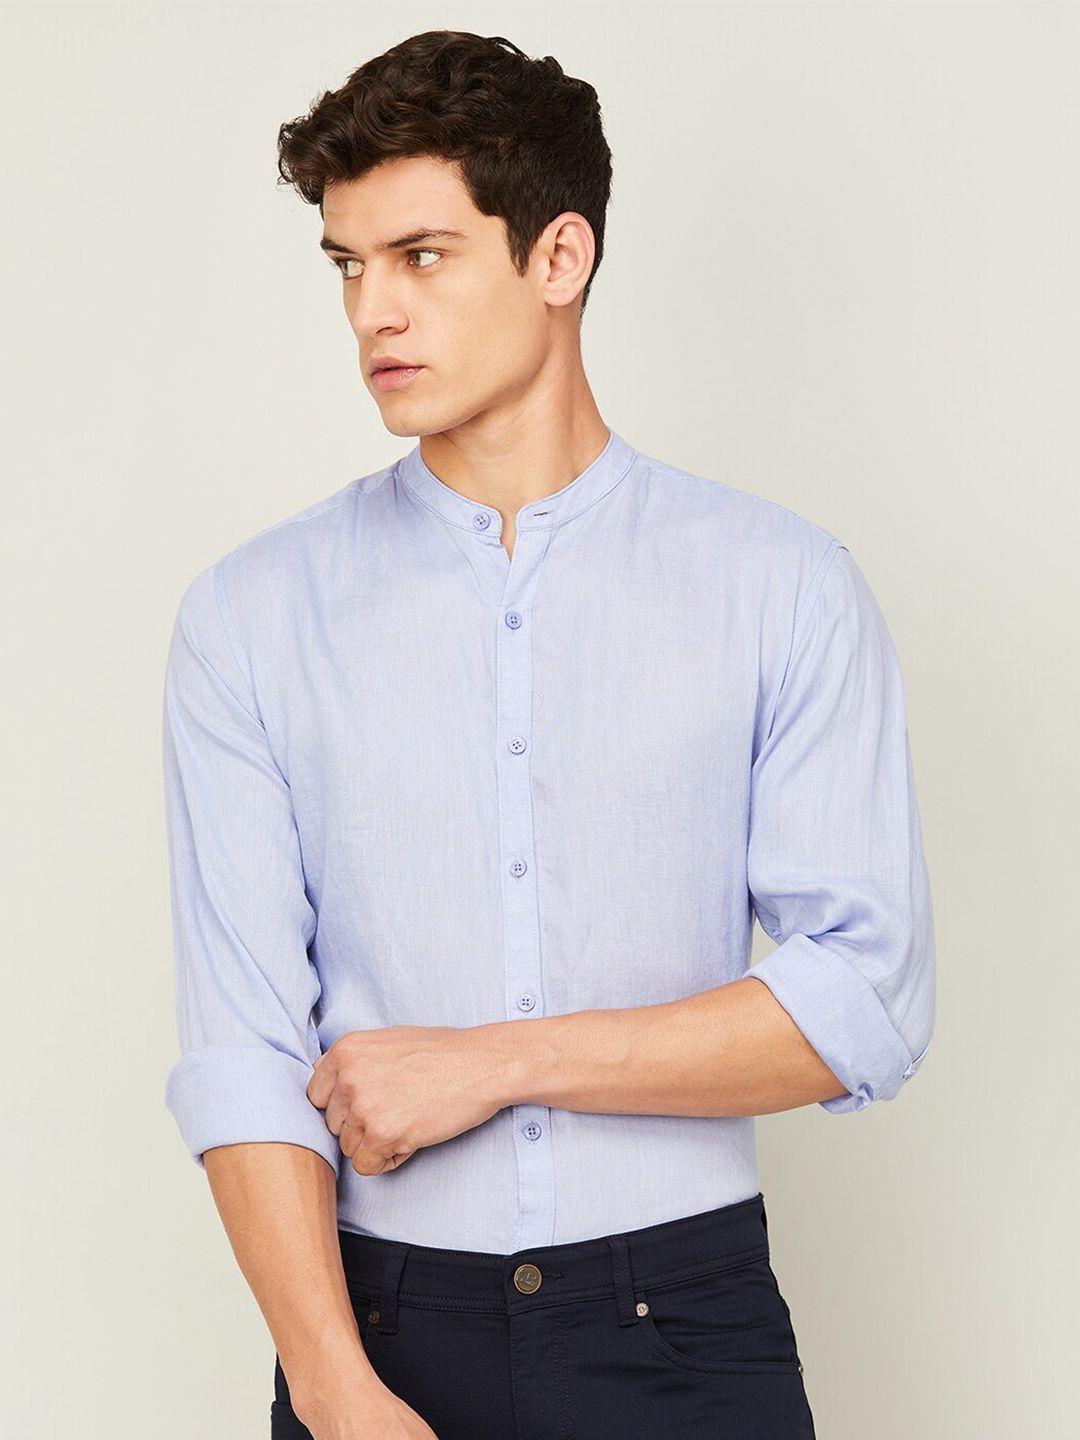 code by lifestyle mandarin collar long sleeves linen casual shirt